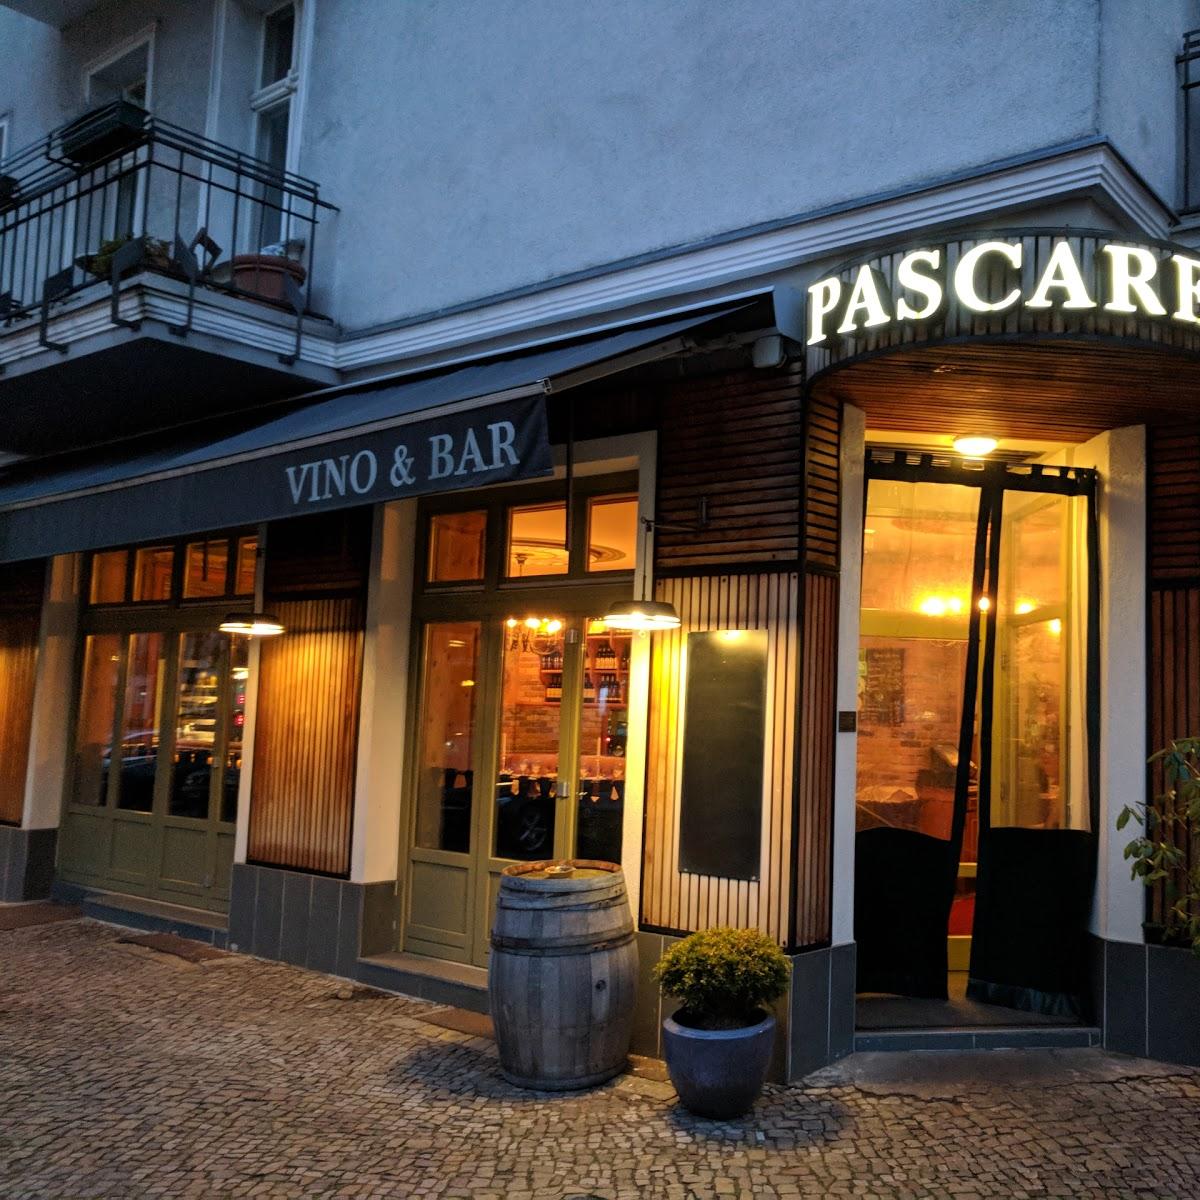 Restaurant "Pascarella" in Berlin